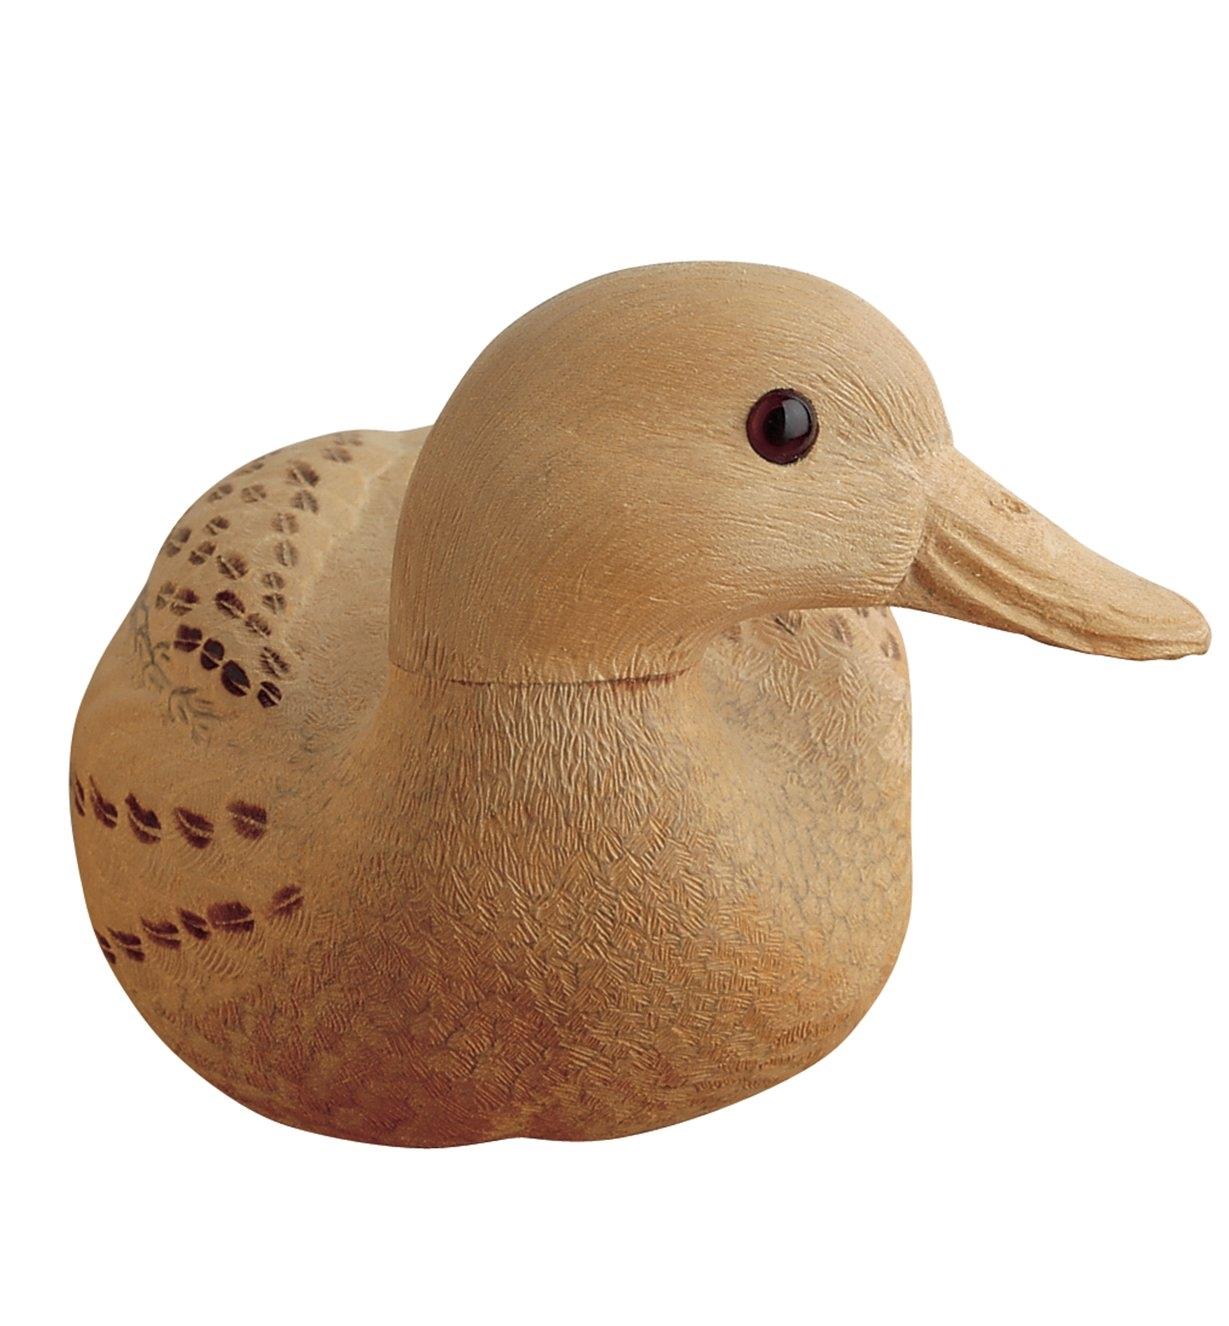 Bird eyes mounted in a wooden duck